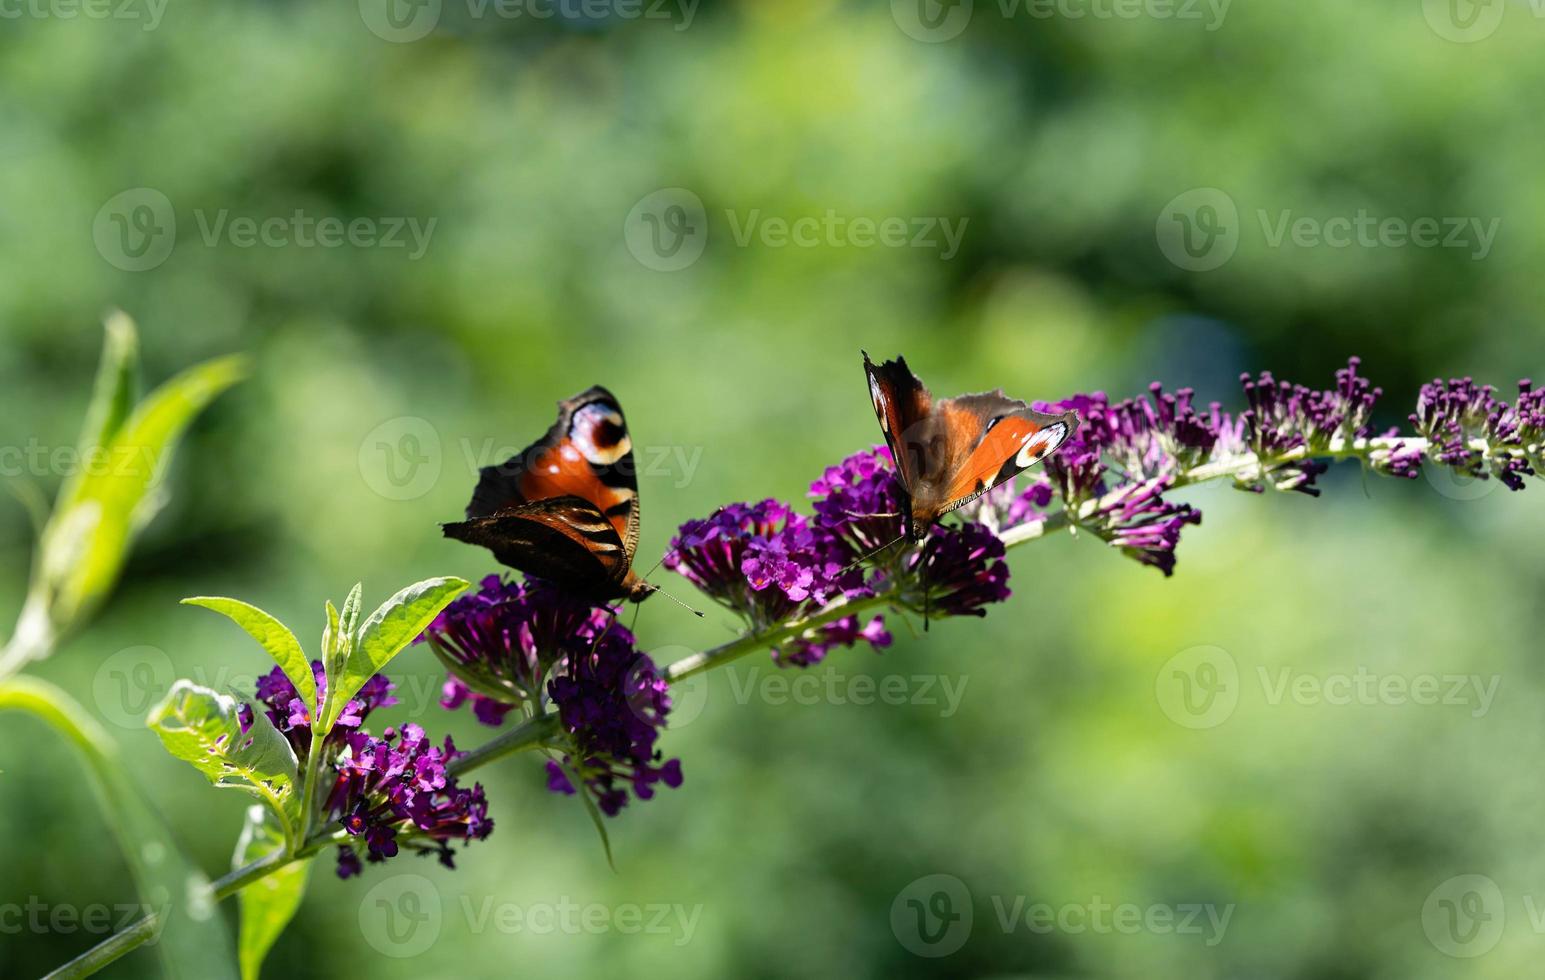 borboleta de pavão ao lado do arbusto de borboleta buddleja davidii foto